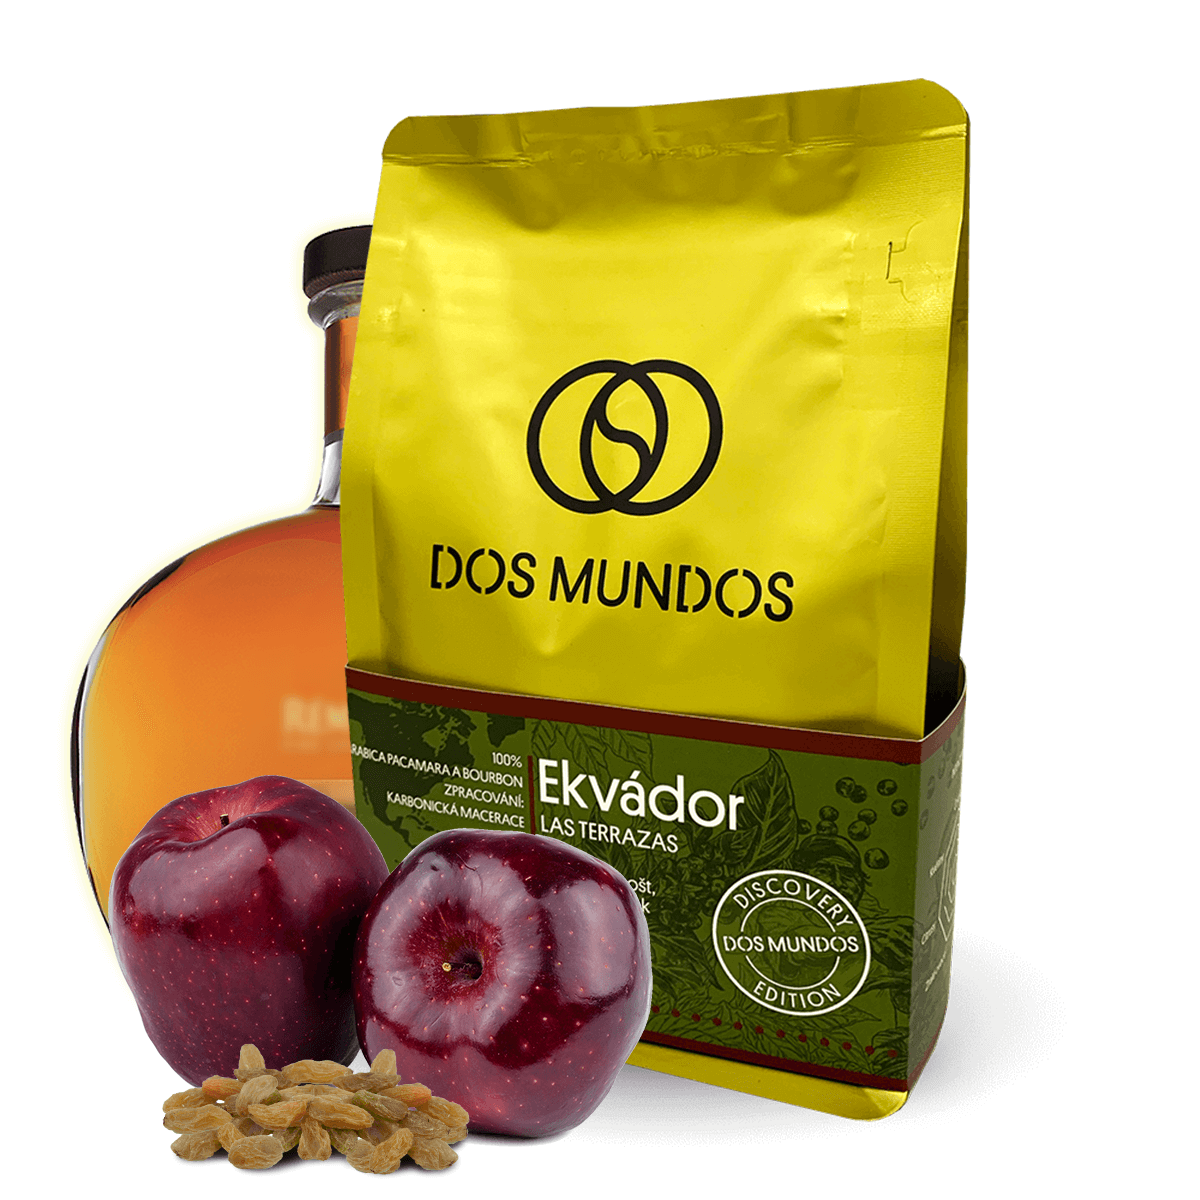 Specialty coffee Dos Mundos Ekvádor LAS TERRAZAS - objevitelská edice